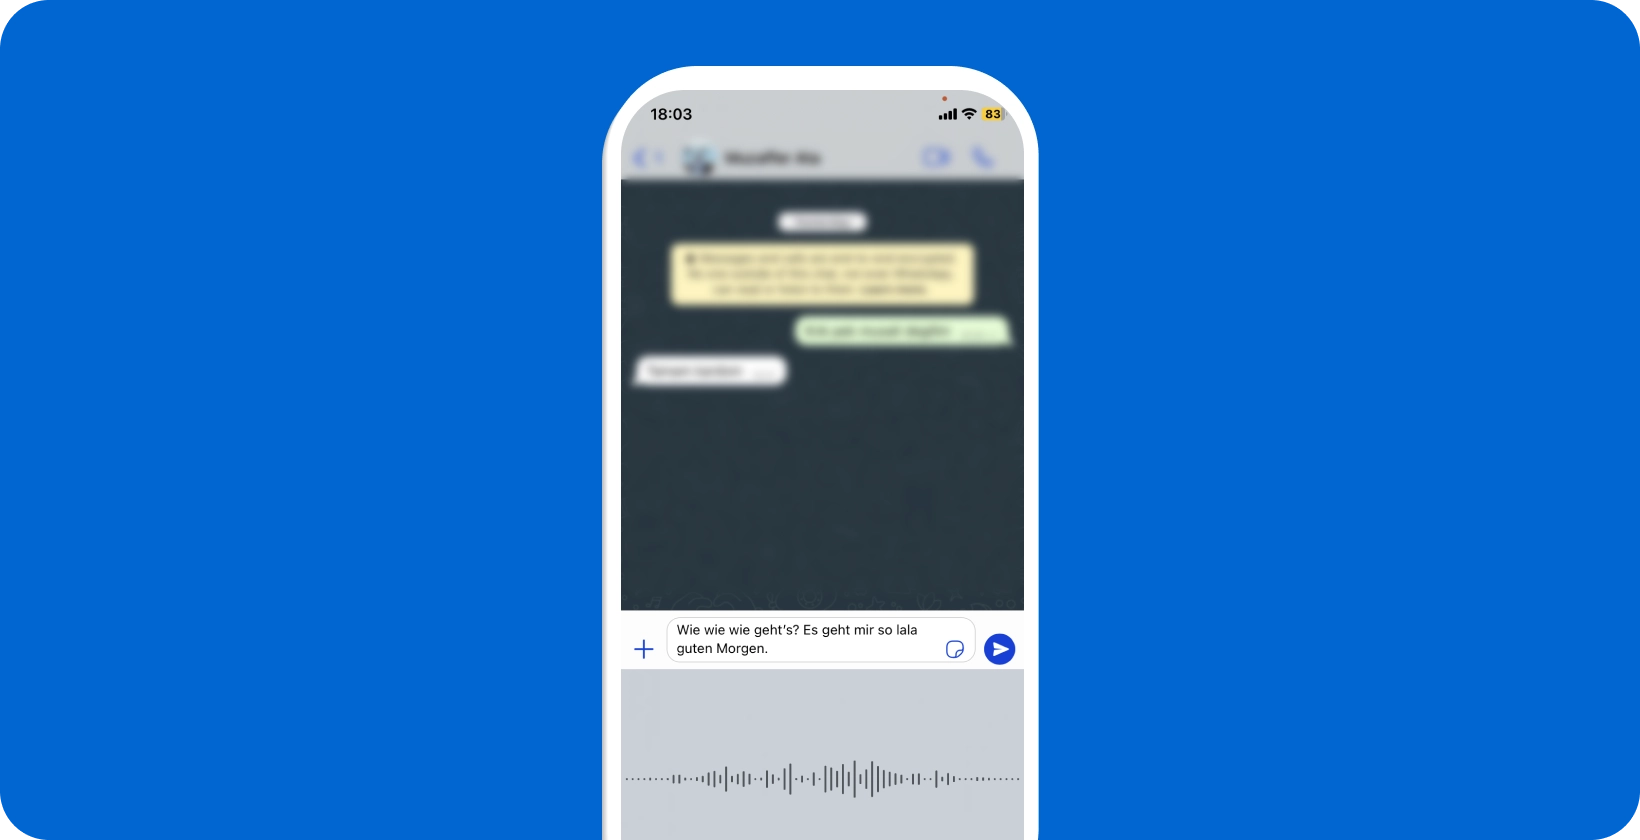 Smartphone που δείχνει WhatsApp υπαγόρευση φωνής σε εξέλιξη, παρουσιάζοντας μετατροπή ομιλίας σε κείμενο σε πραγματικό χρόνο.